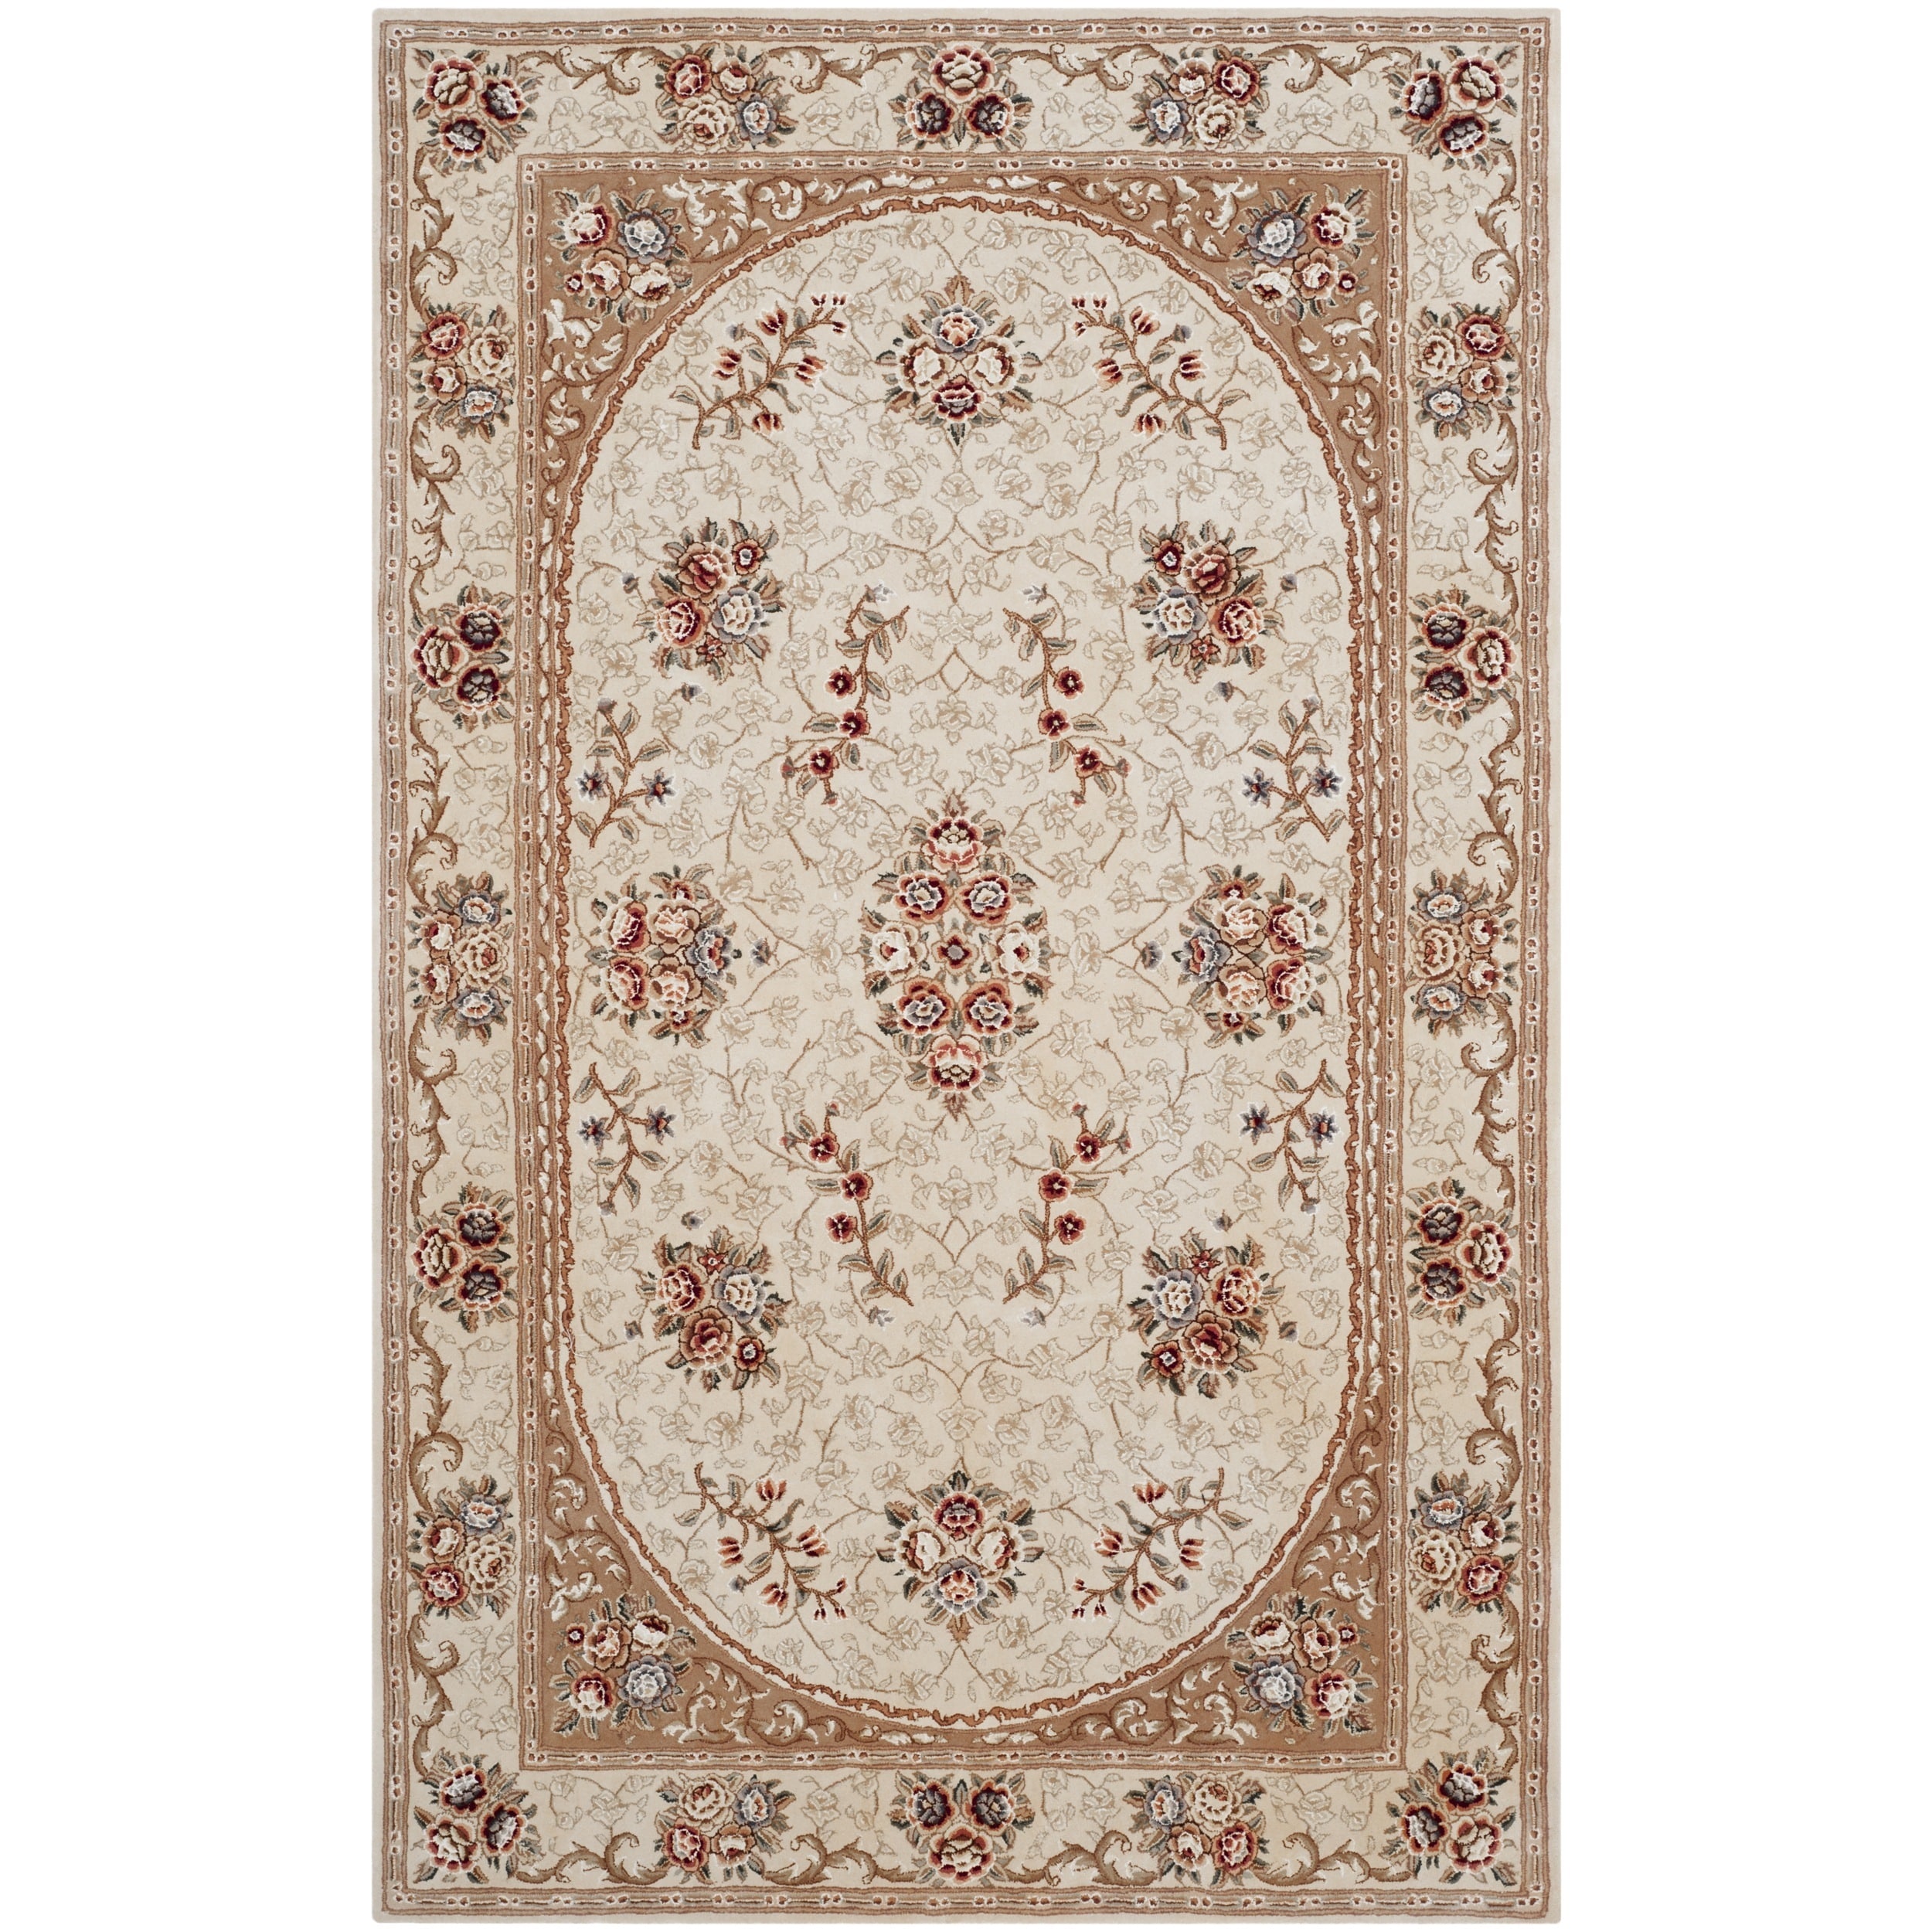 Safavieh Handmade Persian Court Multicolored Wool/ Silk Rug (8 X 10)